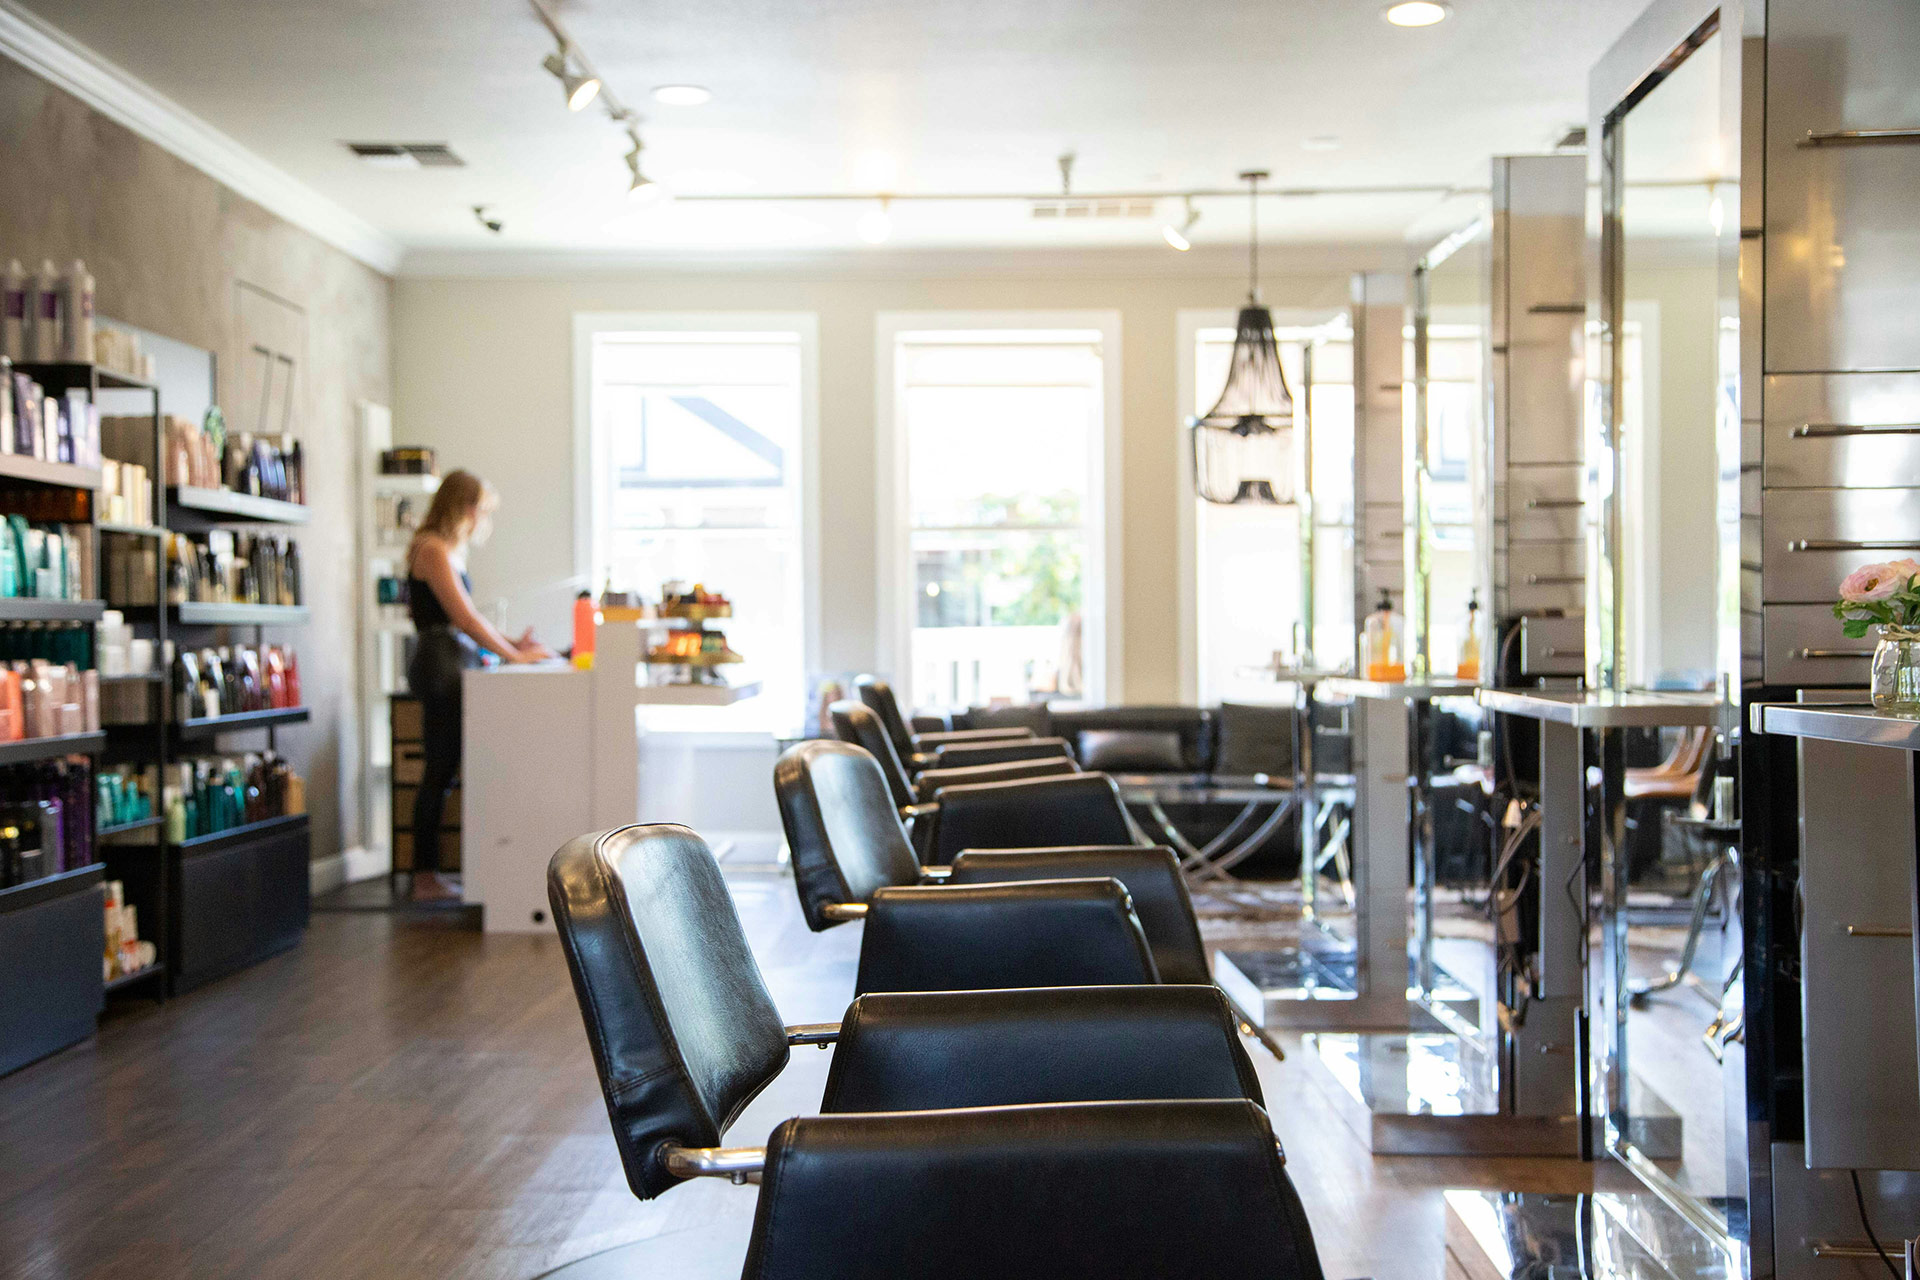 Upscale hair salon